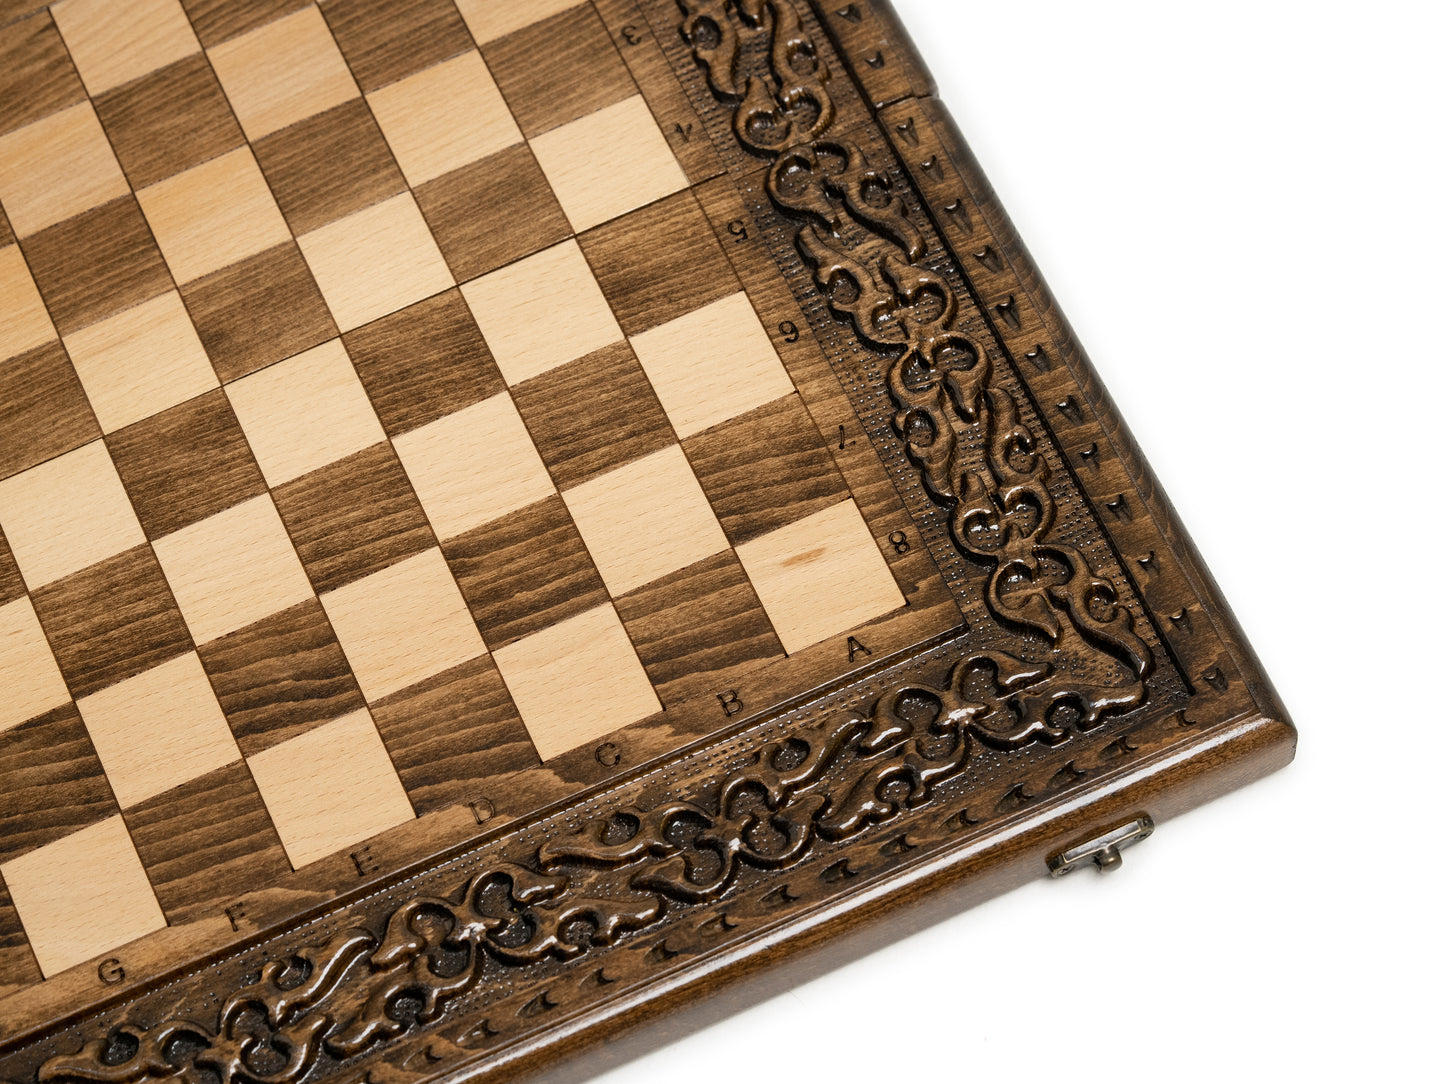 Artisan-crafted chess set showcasing exquisite craftsmanship